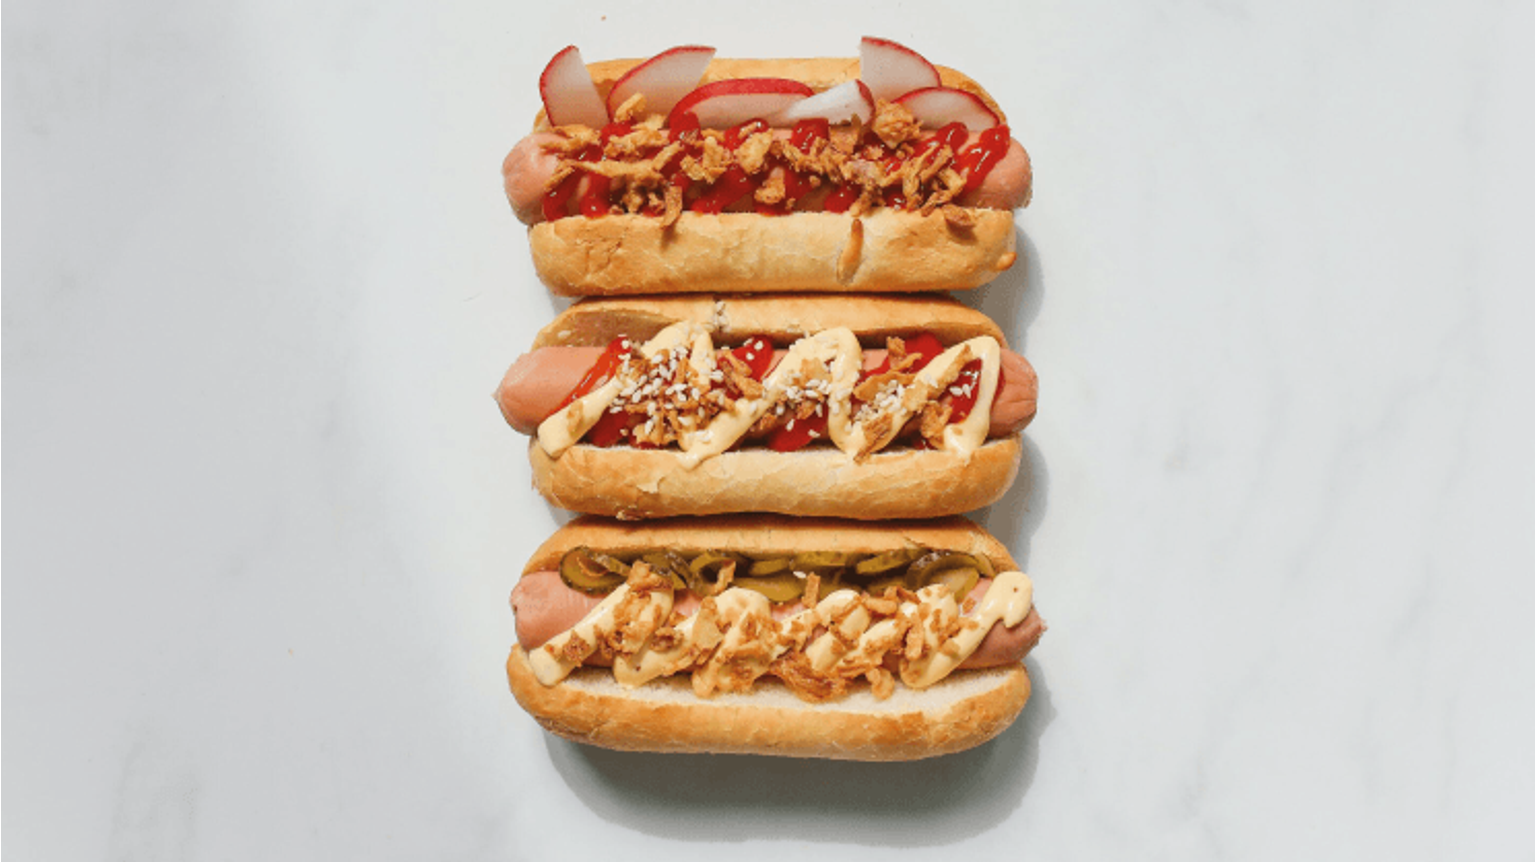 thumbnail for blog article named: Hot dog con birra Oktoberfest!